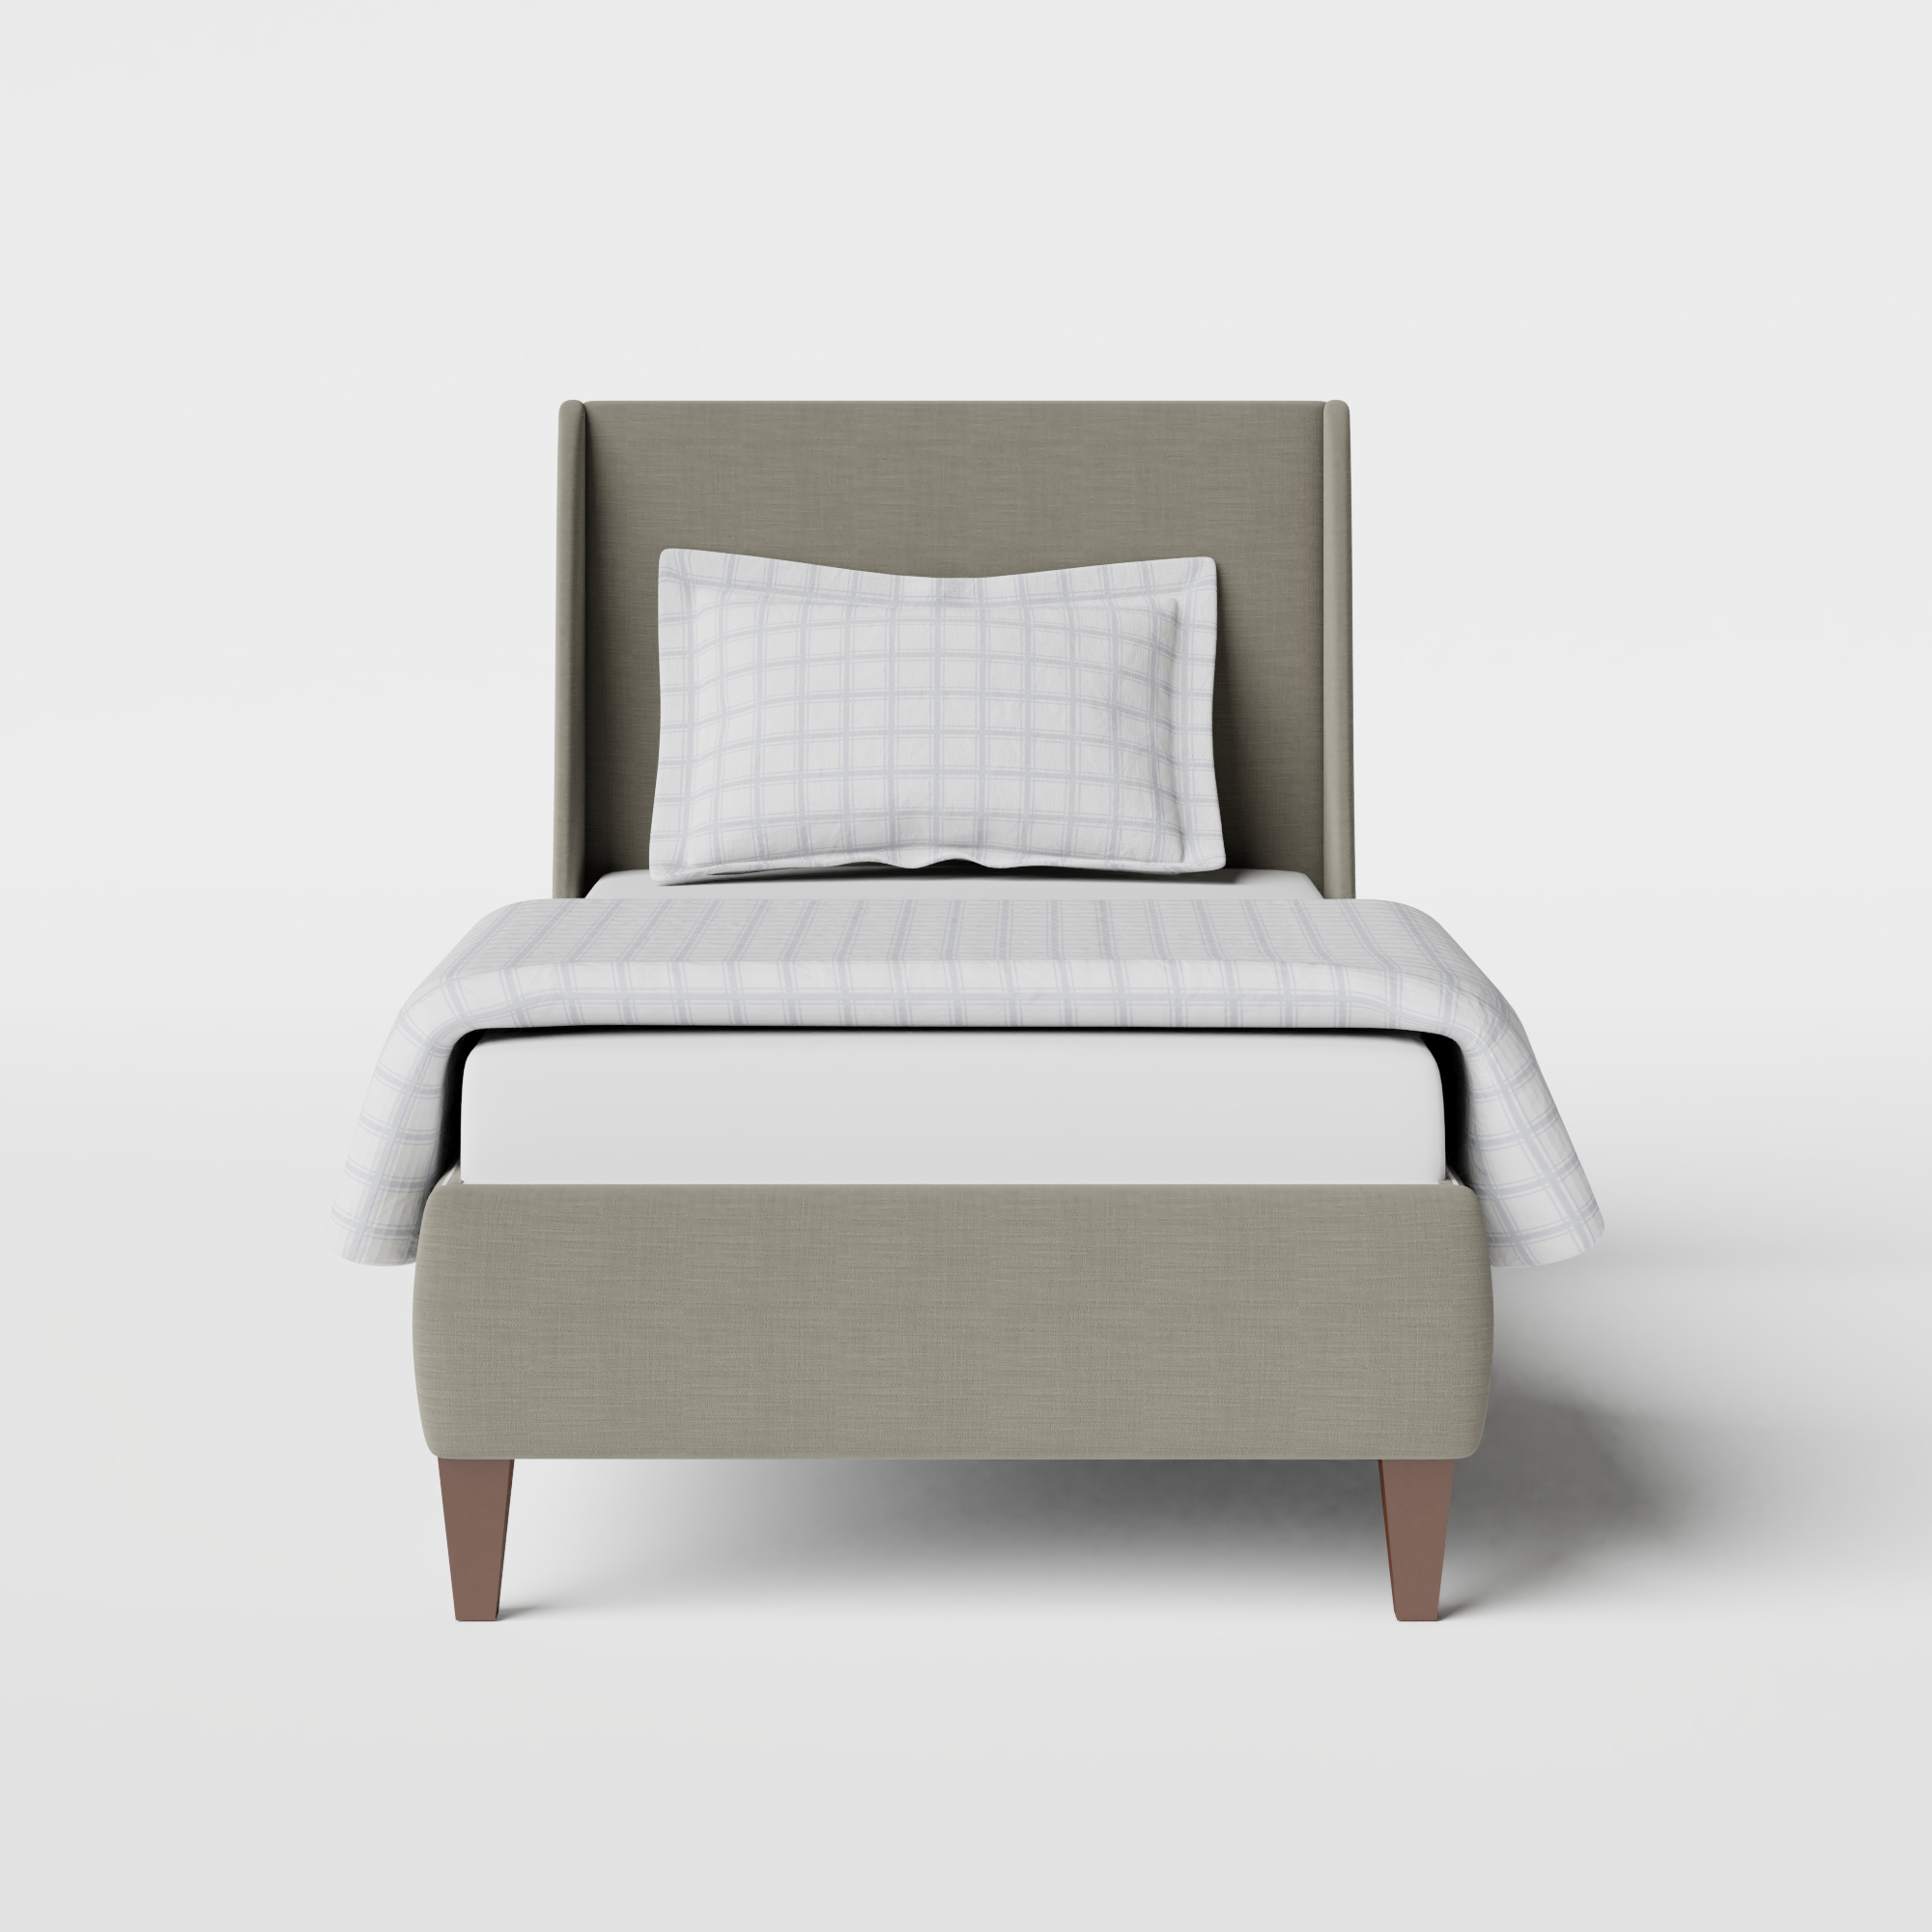 Sunderland cama individual tapizada en tela gris